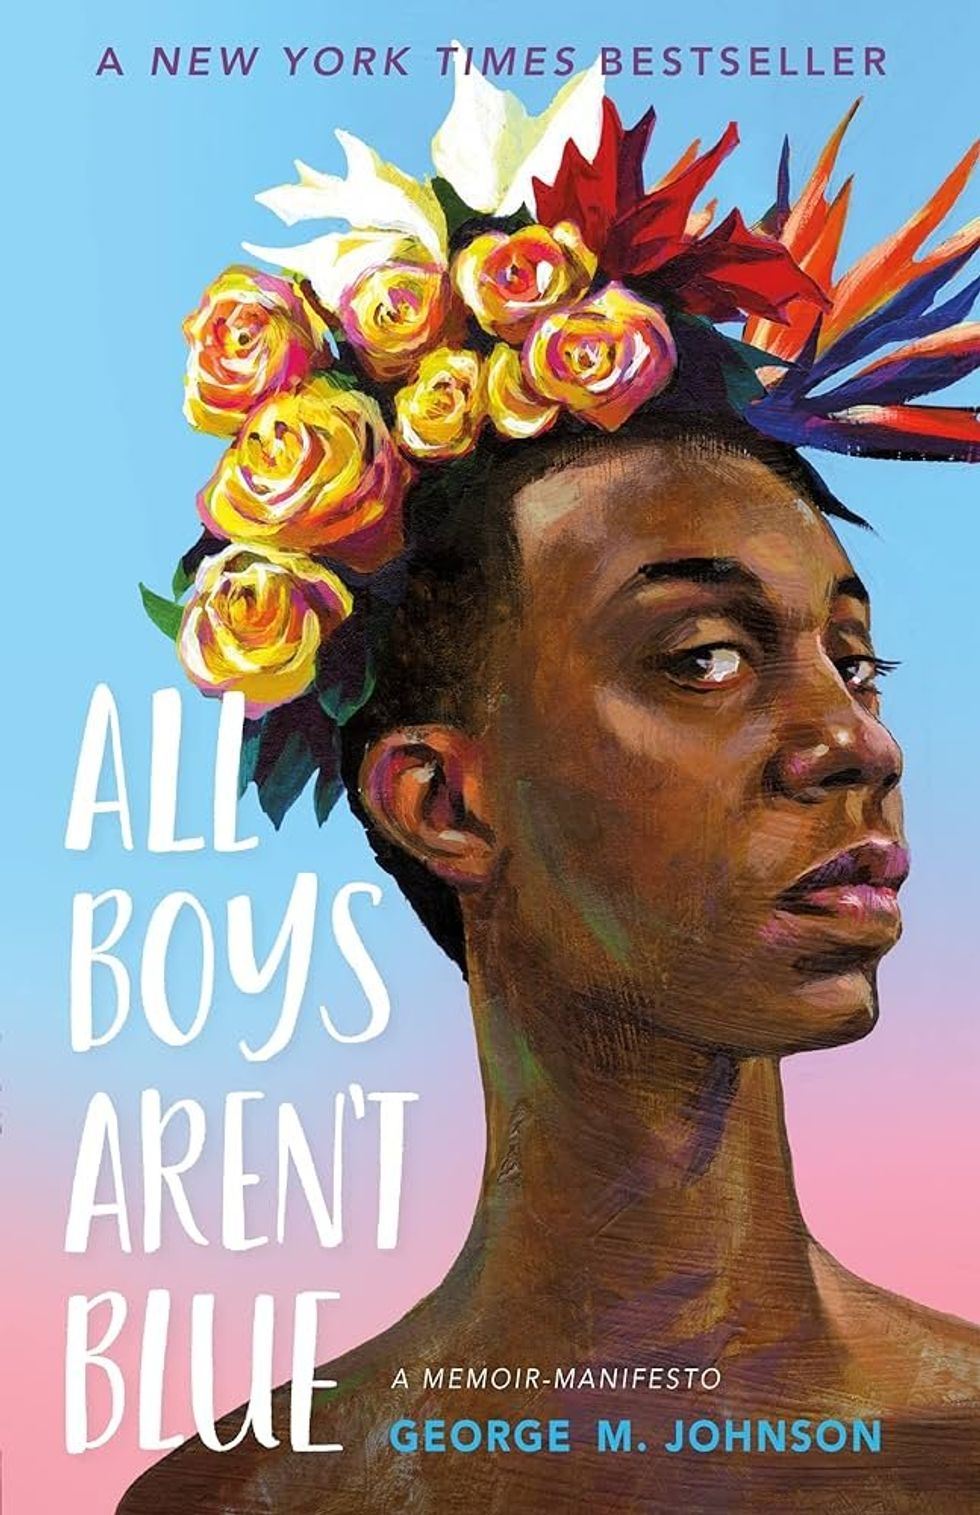 Not all boys are blue: A memoir manifesto